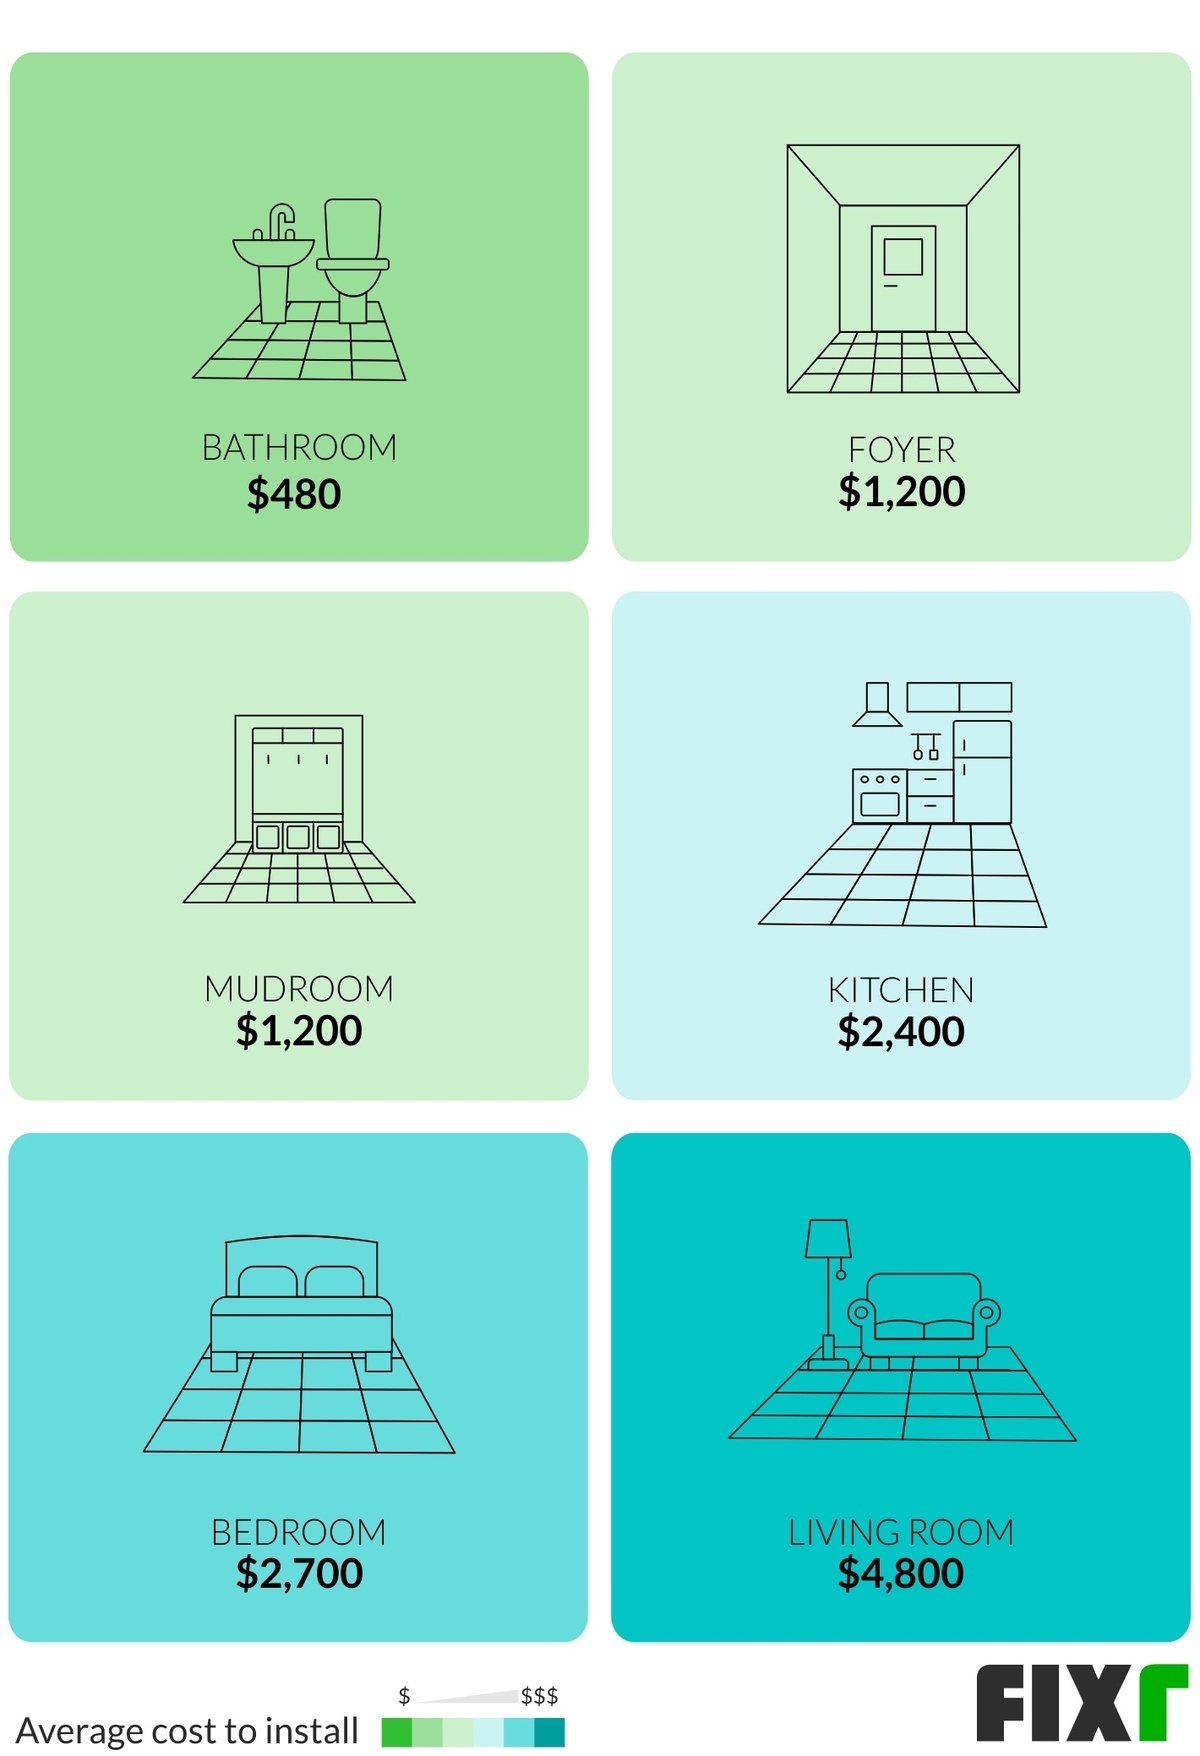 Ceramic Tile Flooring Installation Cost, How Much Should Tile Installation Cost Per Square Foot